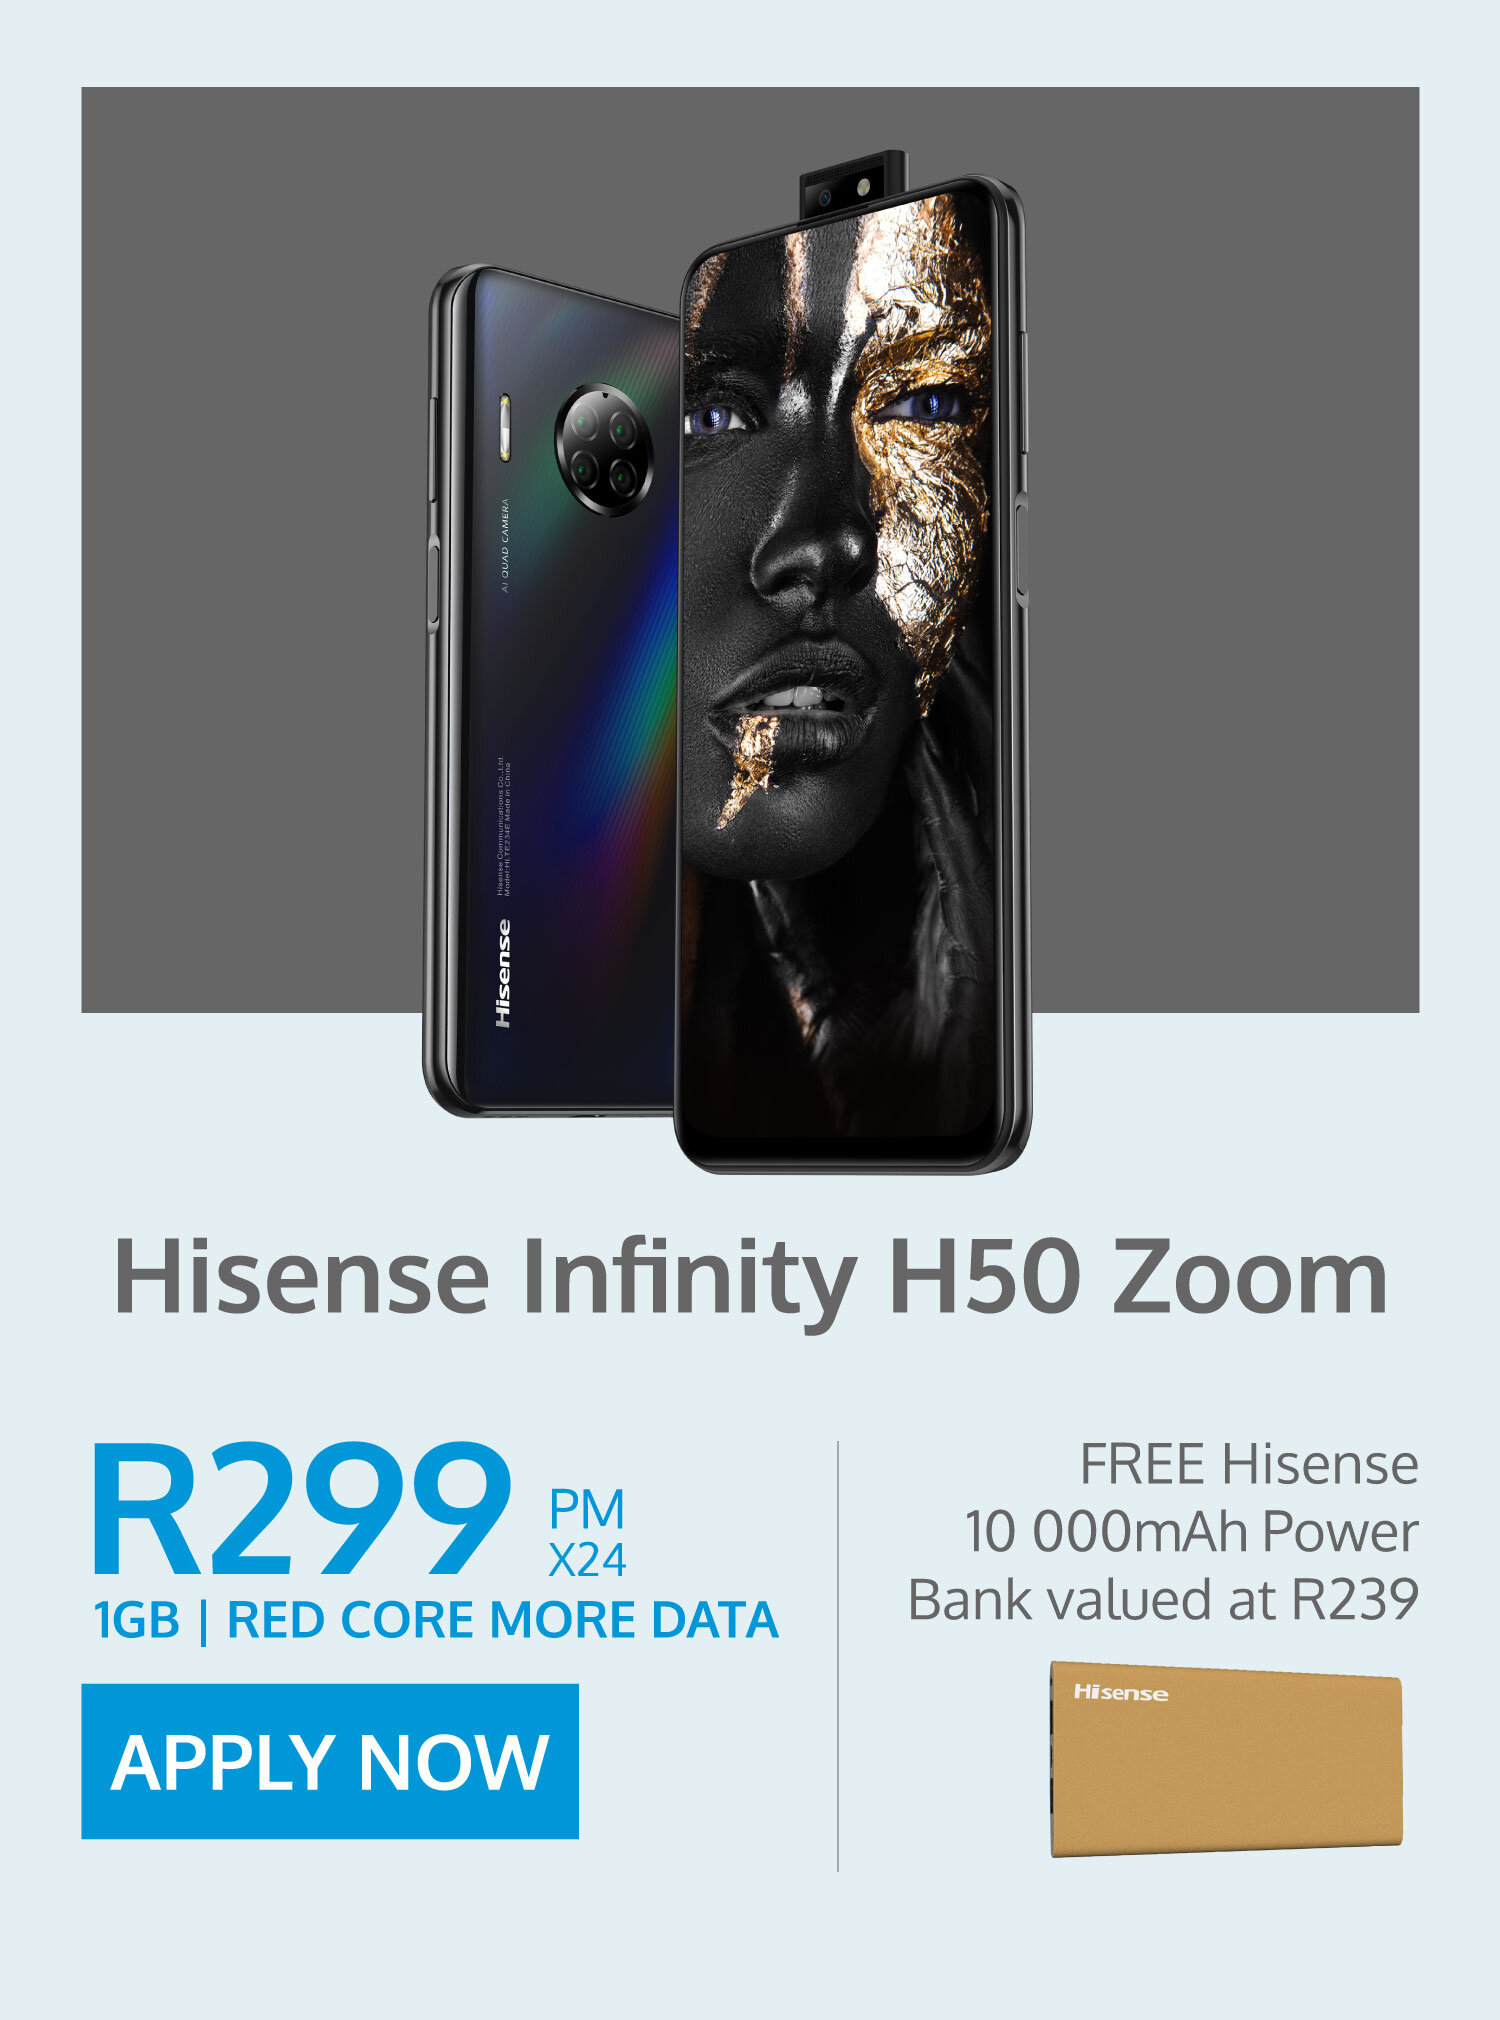 hisense H50 zoom contracat deal